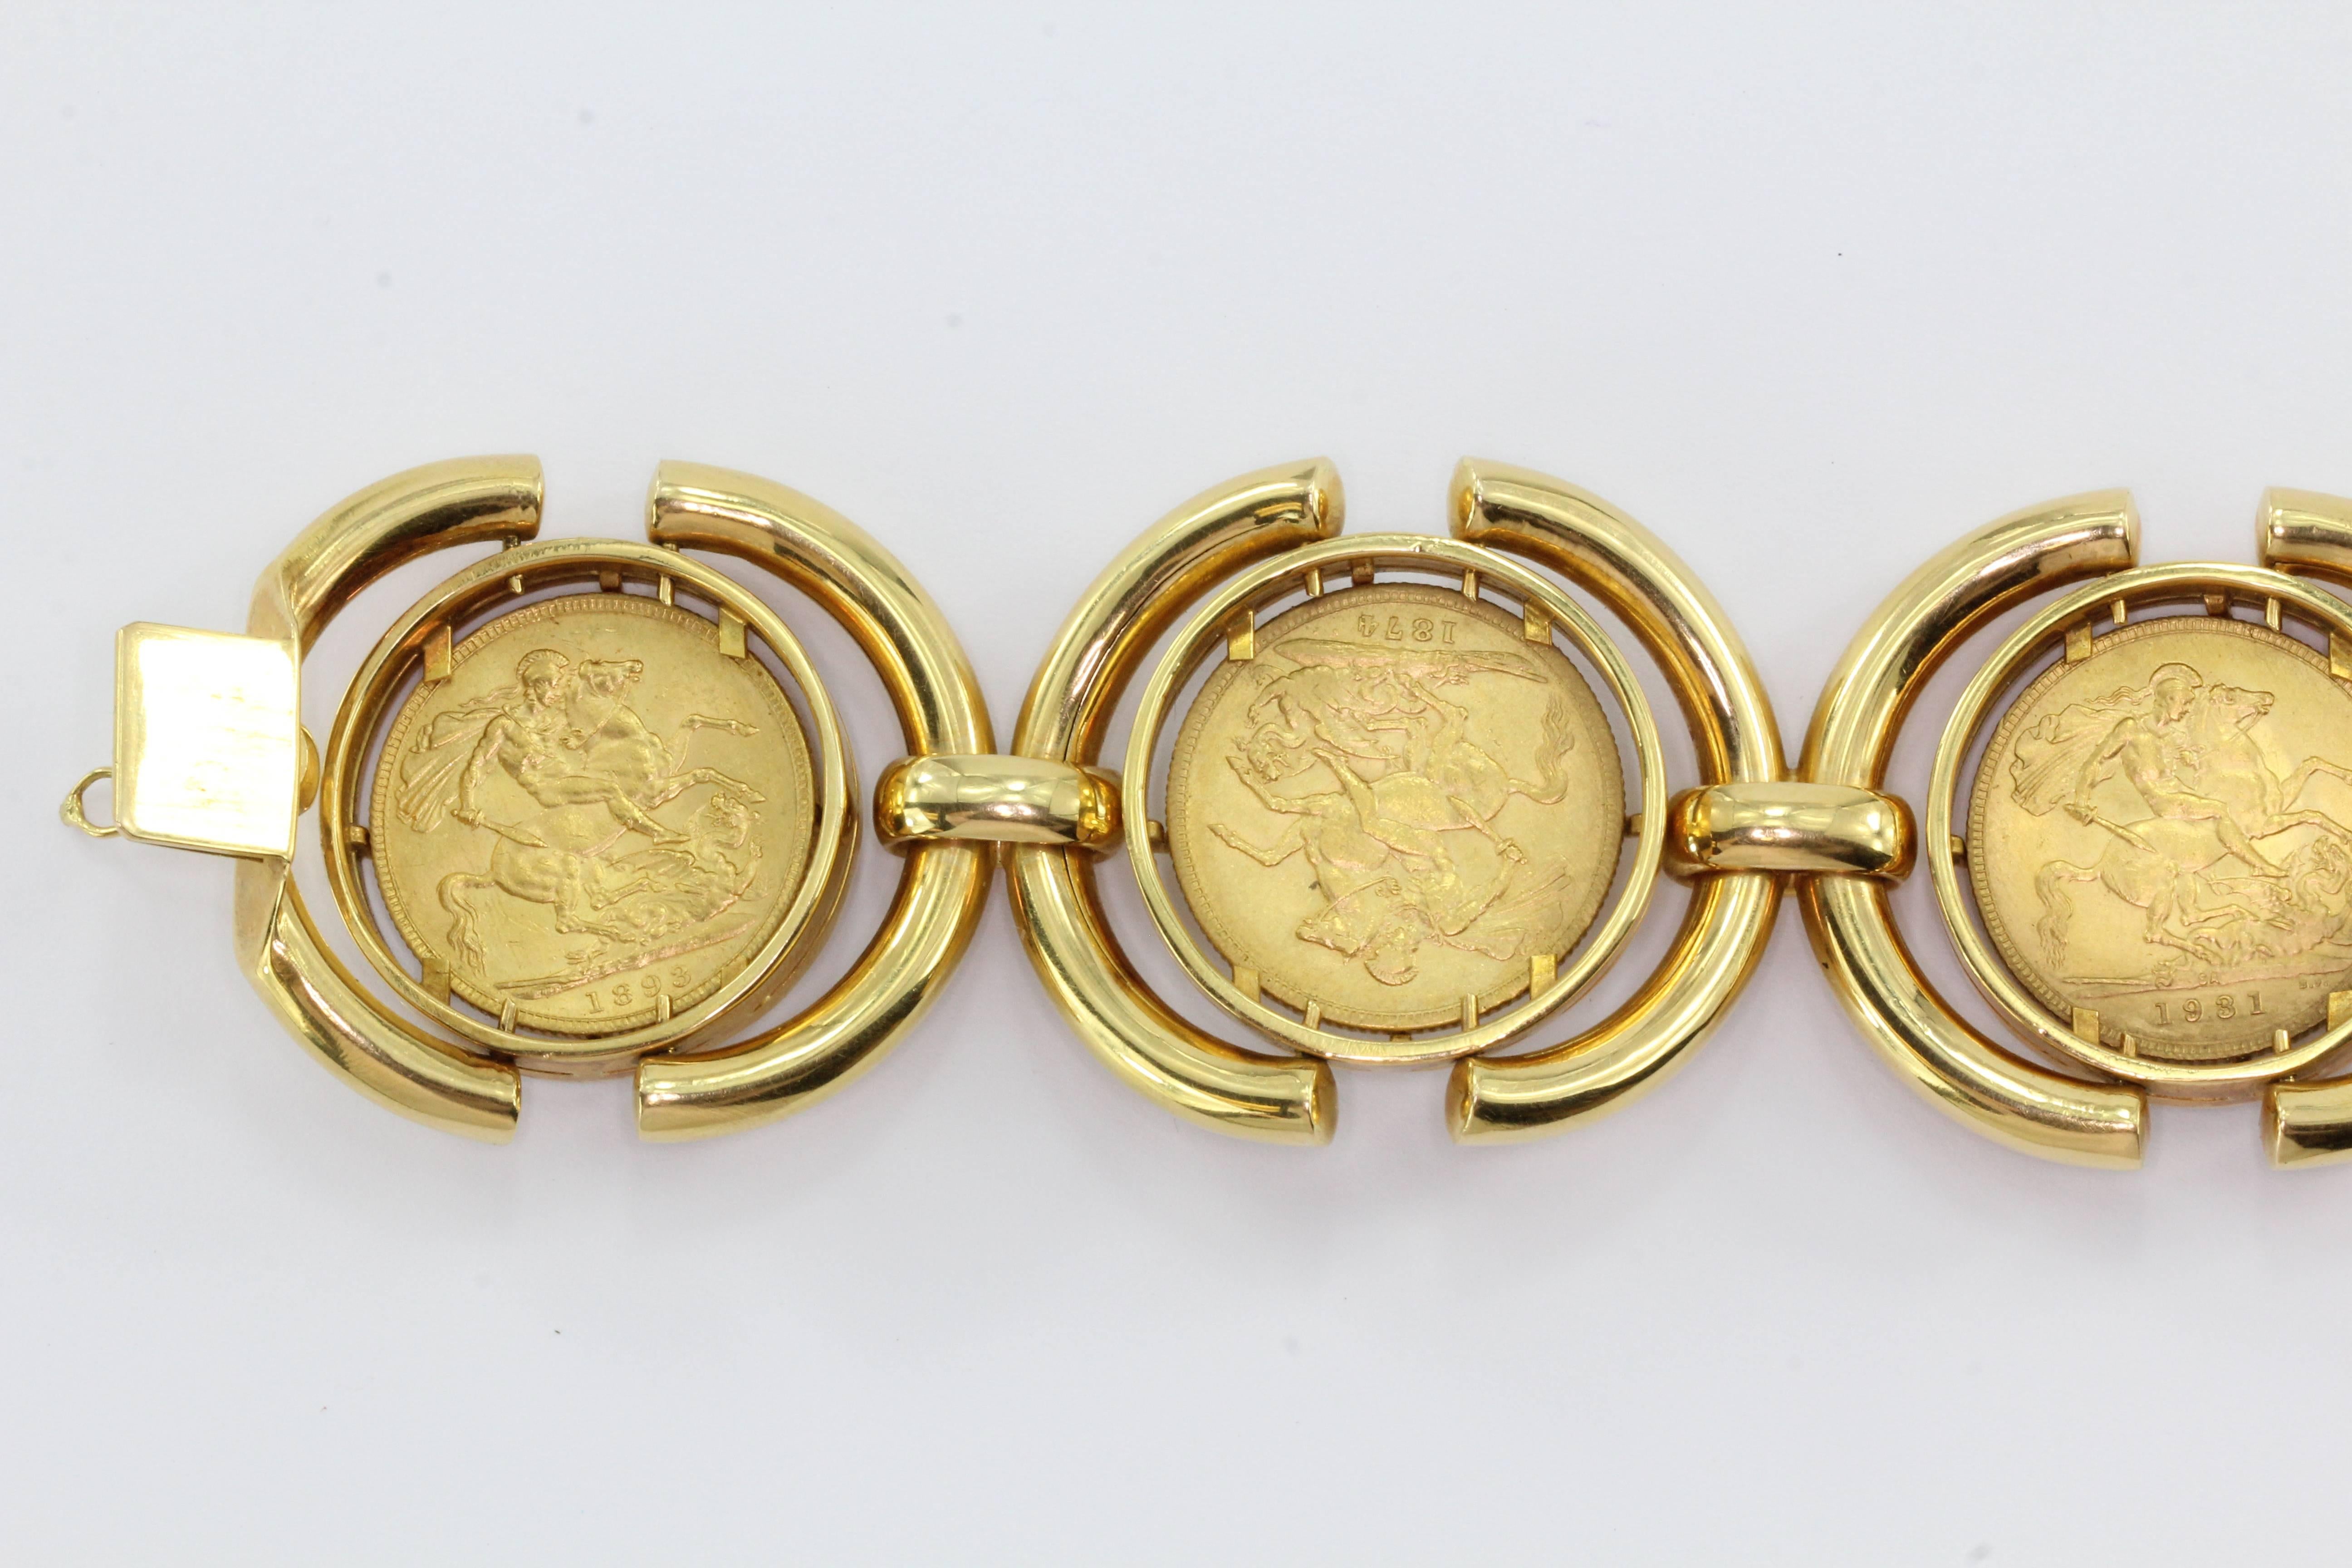 Modern Heavy British Gold Sovereign Coin Bracelet from Verona Italy